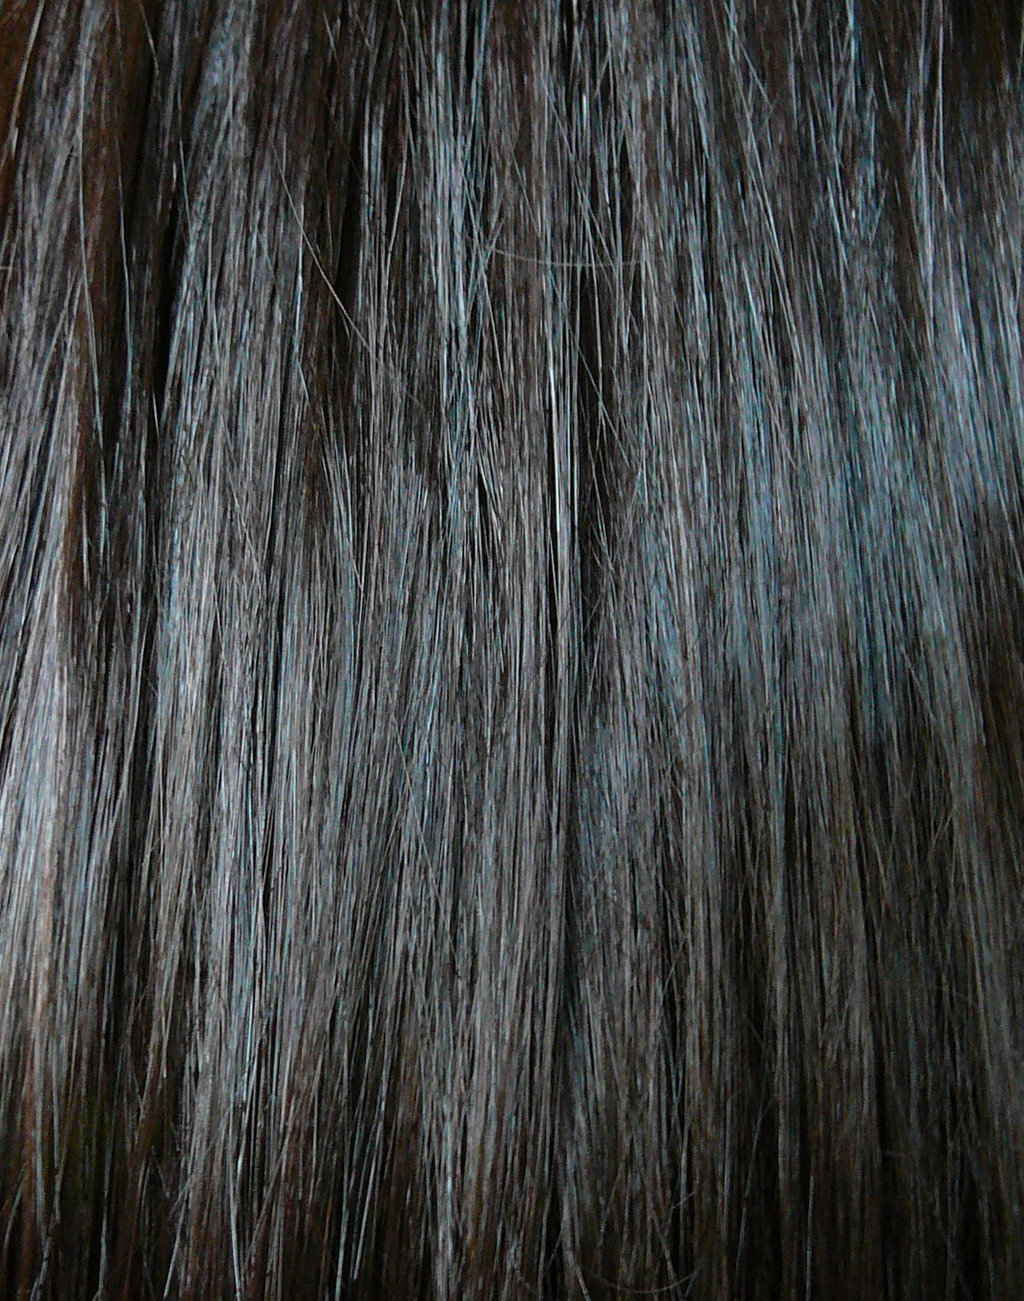 hair texture, background, black hair texture, background